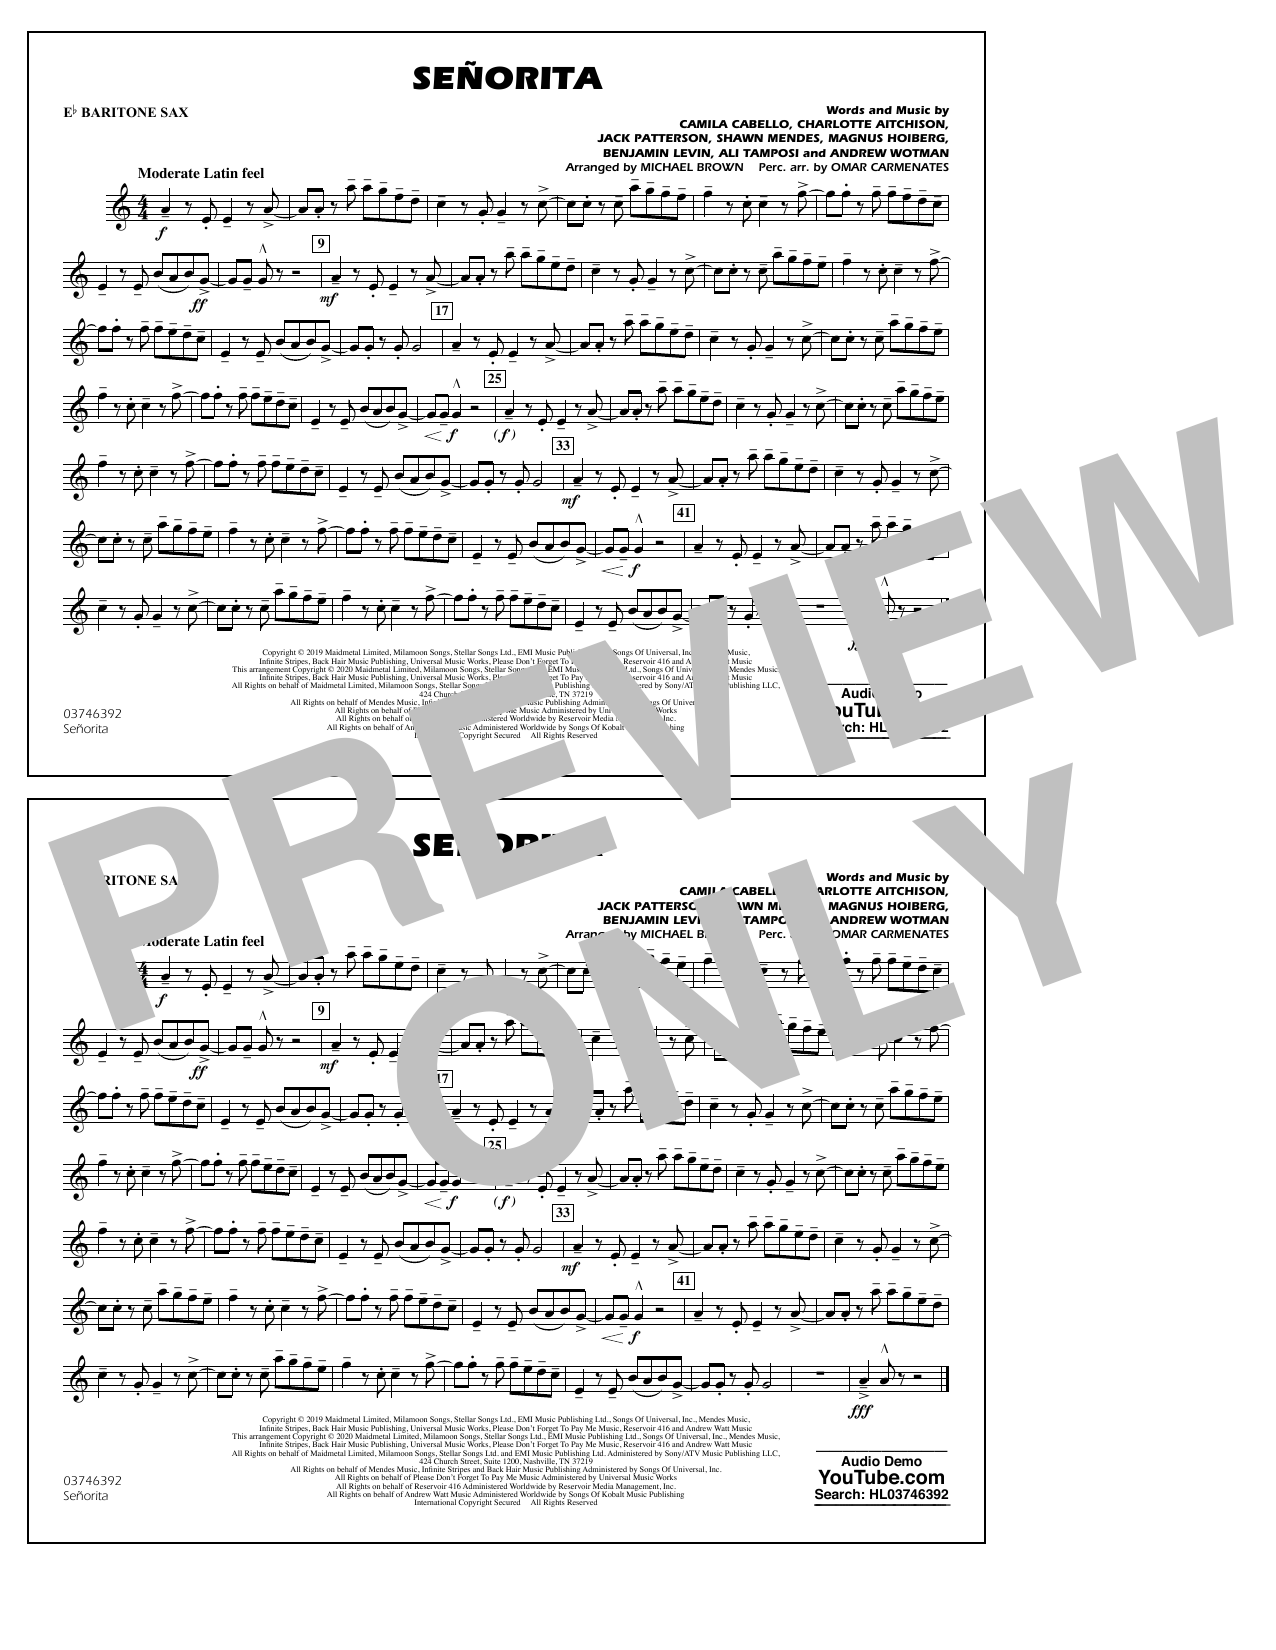 Shawn Mendes & Camila Cabello Señorita (arr. Carmenates and Brown) - Eb Baritone Sax Sheet Music Notes & Chords for Marching Band - Download or Print PDF